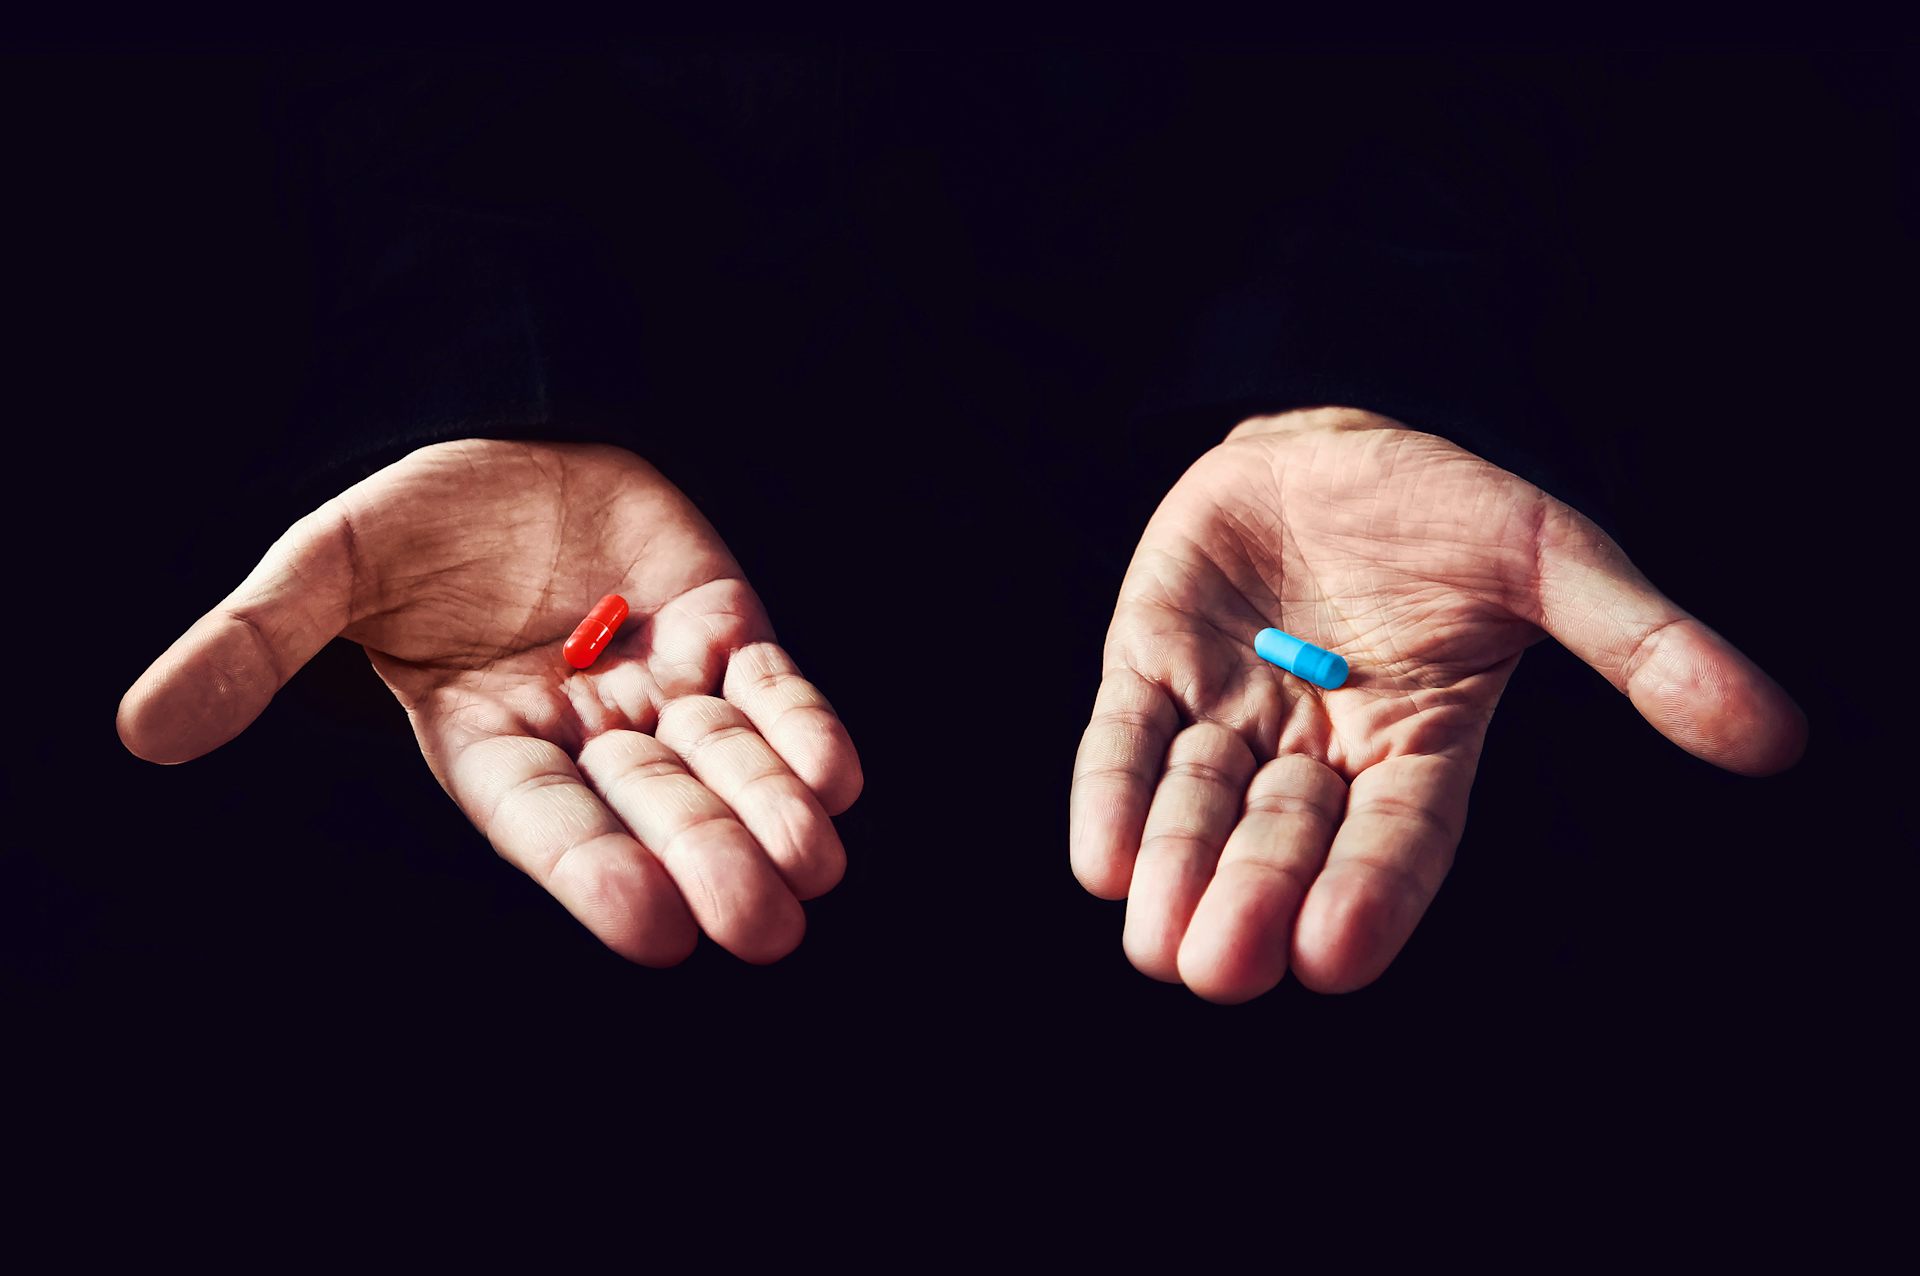 matrix blue pill red pill meaning